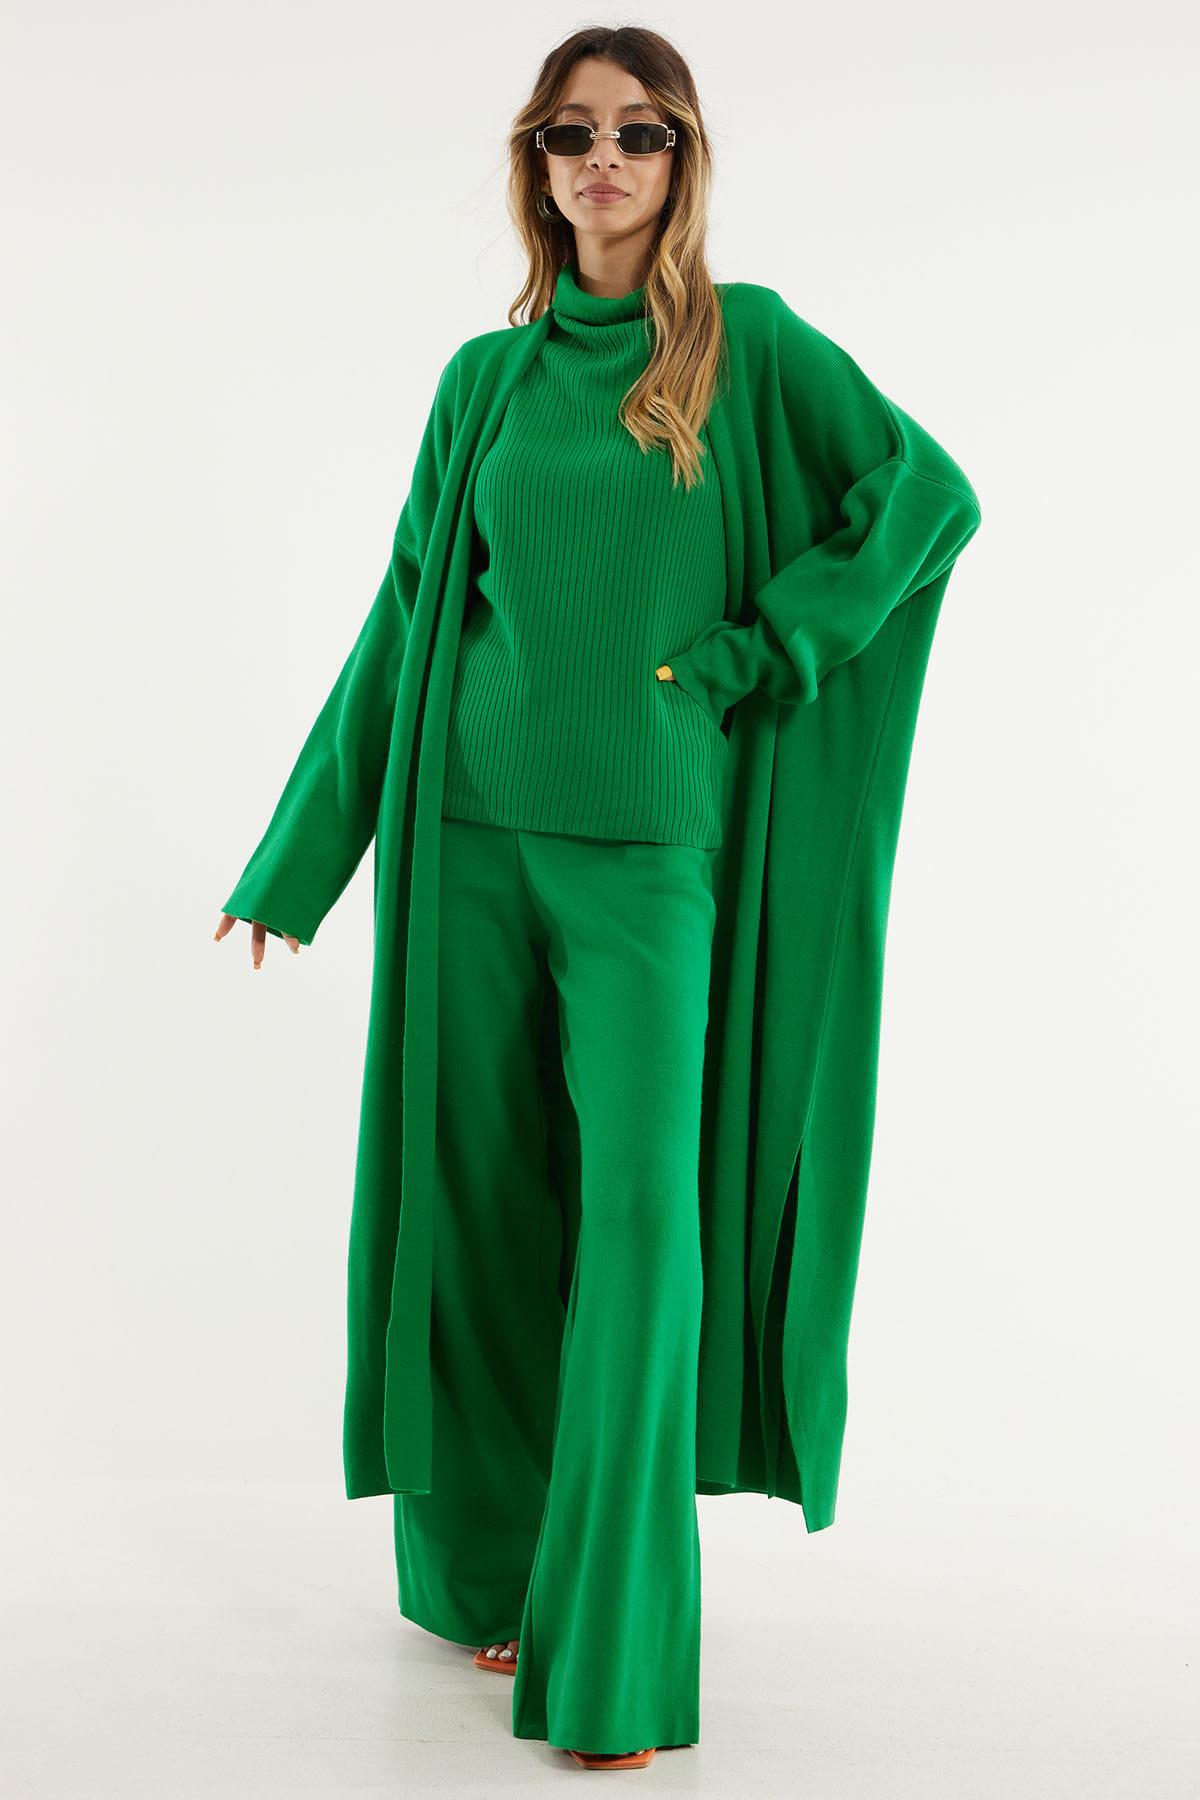 A wholesale clothing model wears Cardigan Knitwear Triple Suit - Benetton Green, Turkish wholesale Suit of Qustyle